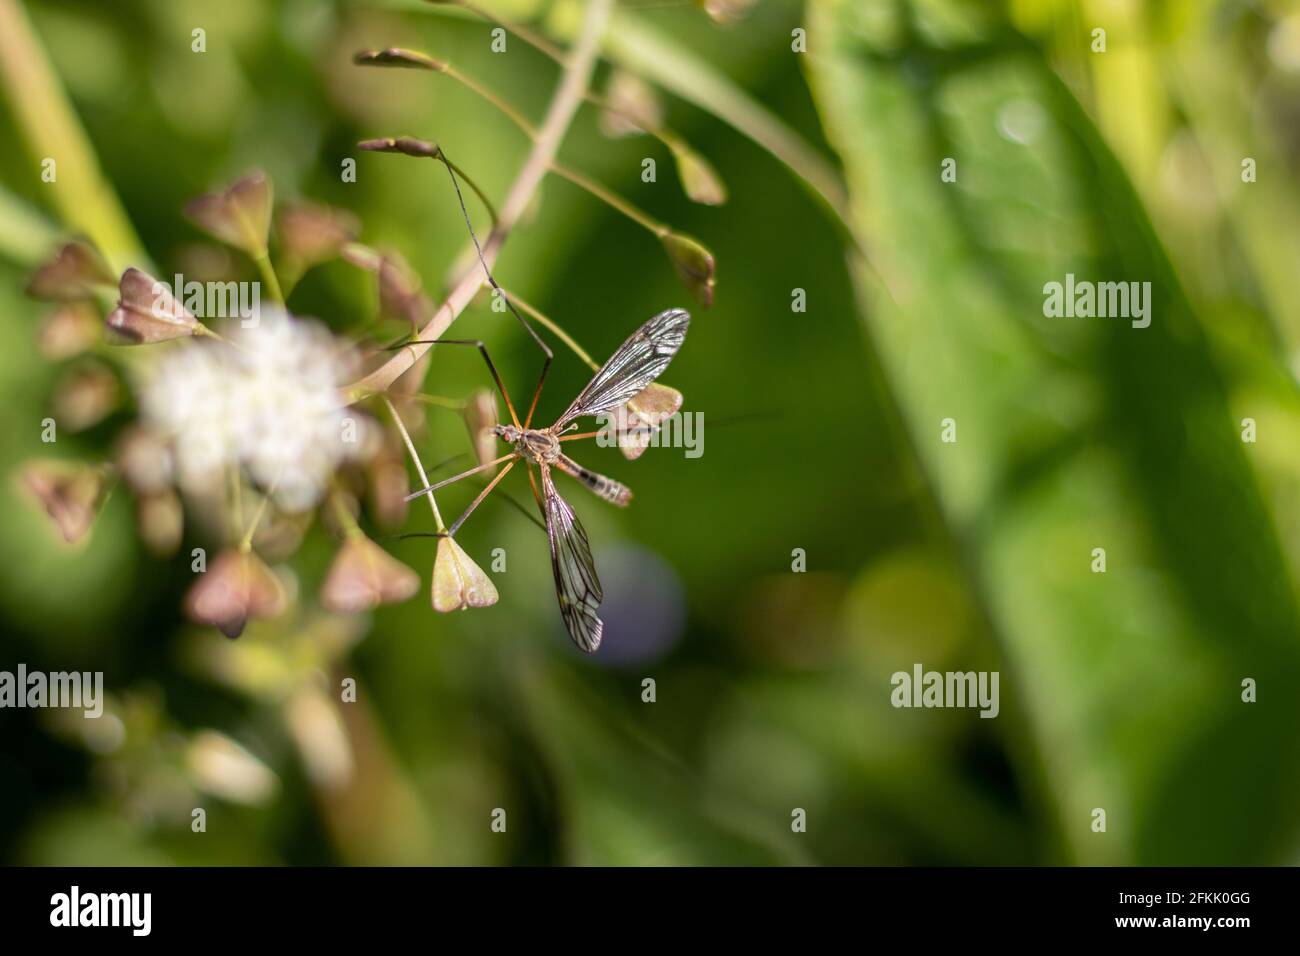 A crane fly in between weeds Stock Photo